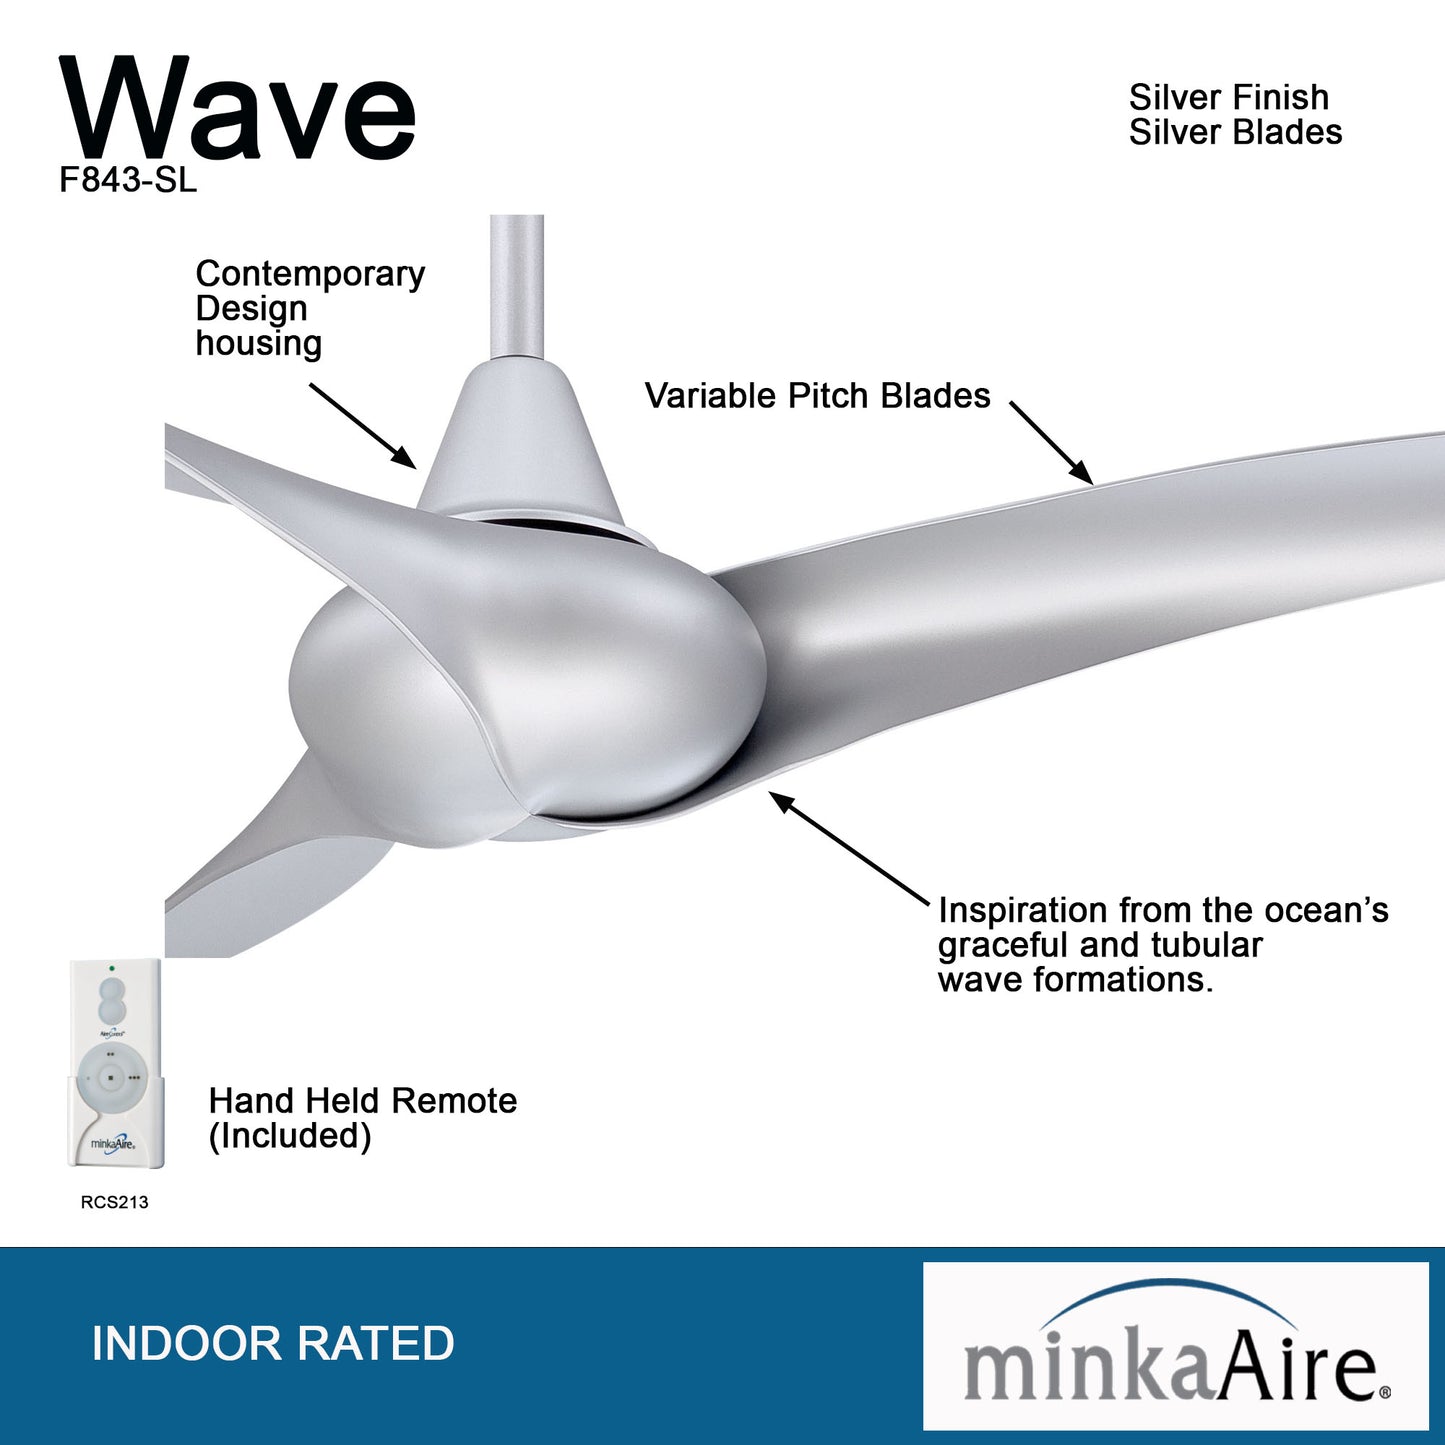 Minka Aire Wave シーリングファン【F843-SL】